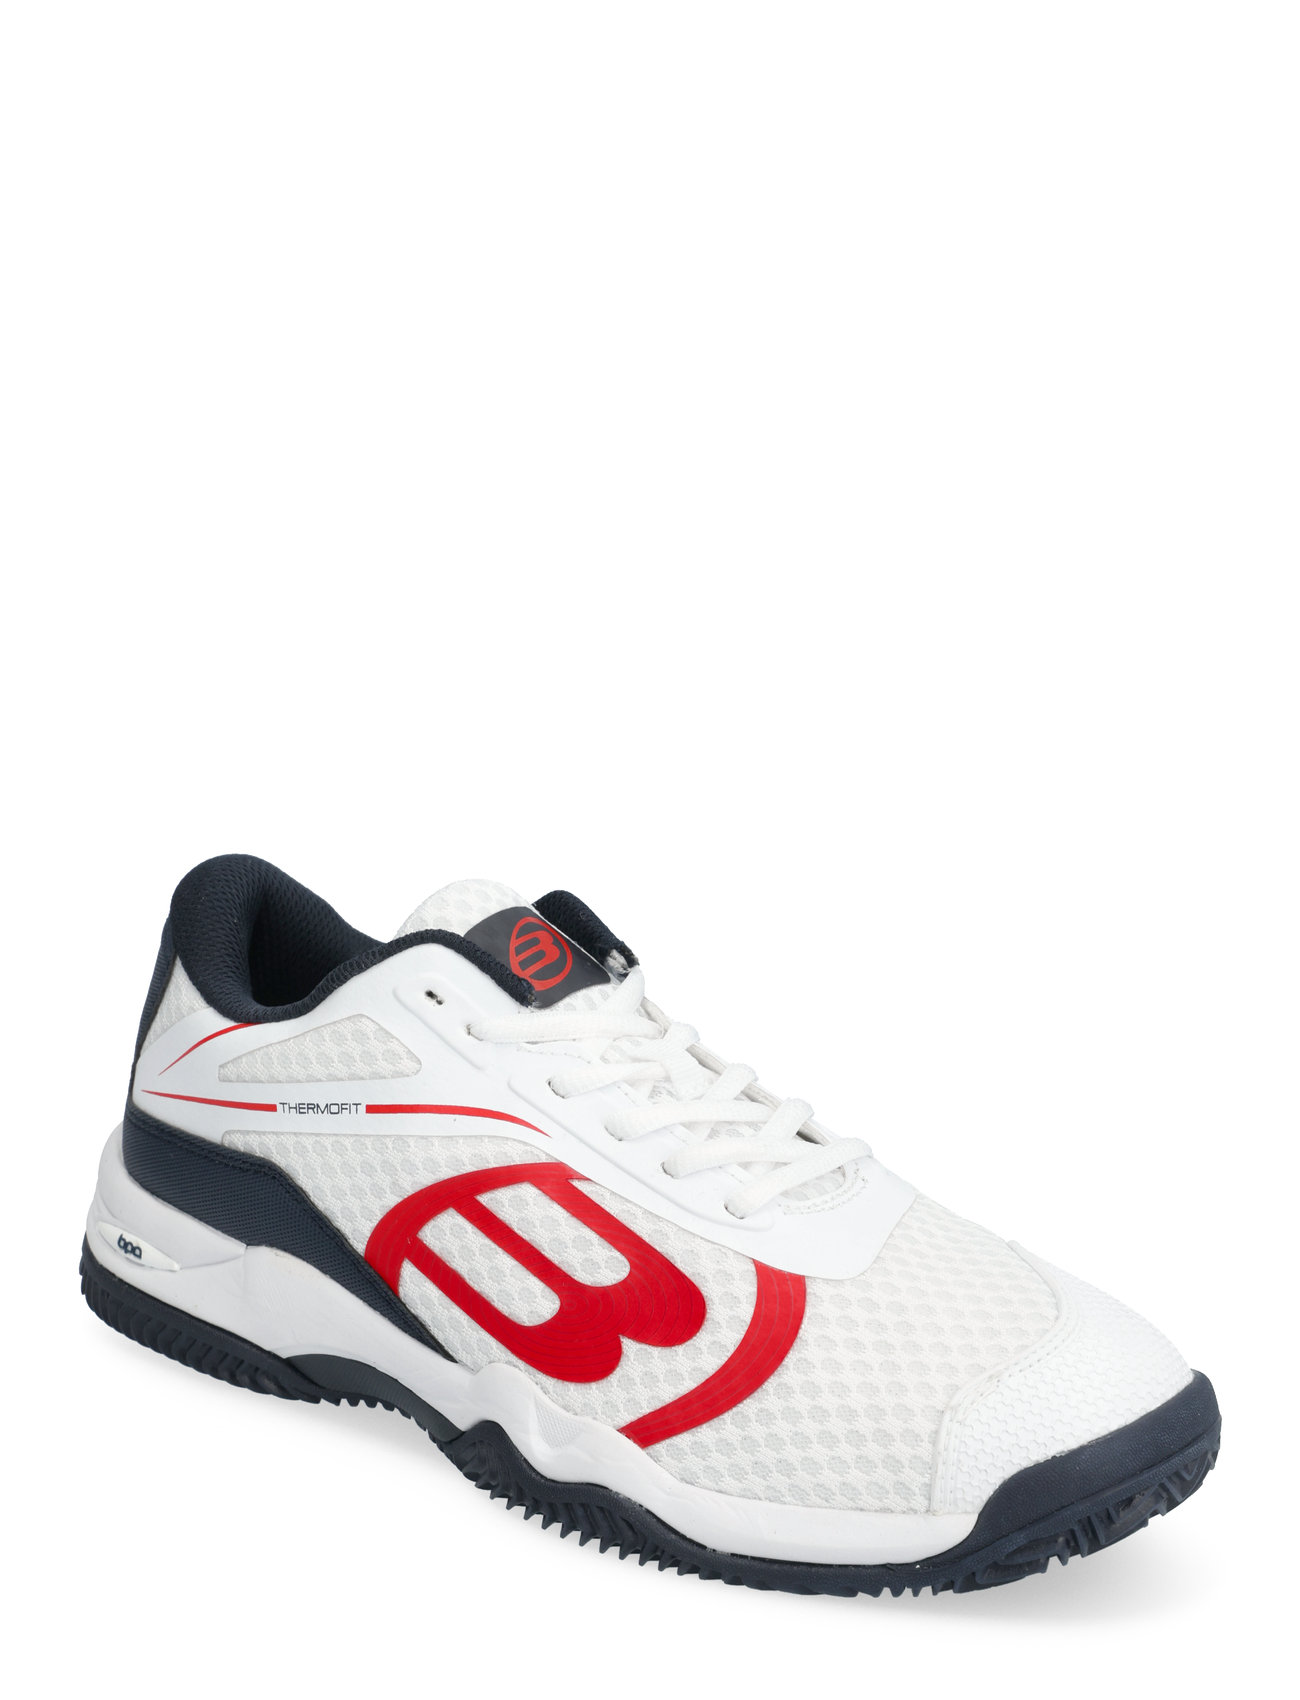 Beker 23V Sport Sport Shoes Racketsports Shoes Padel Shoes White Bullpadel